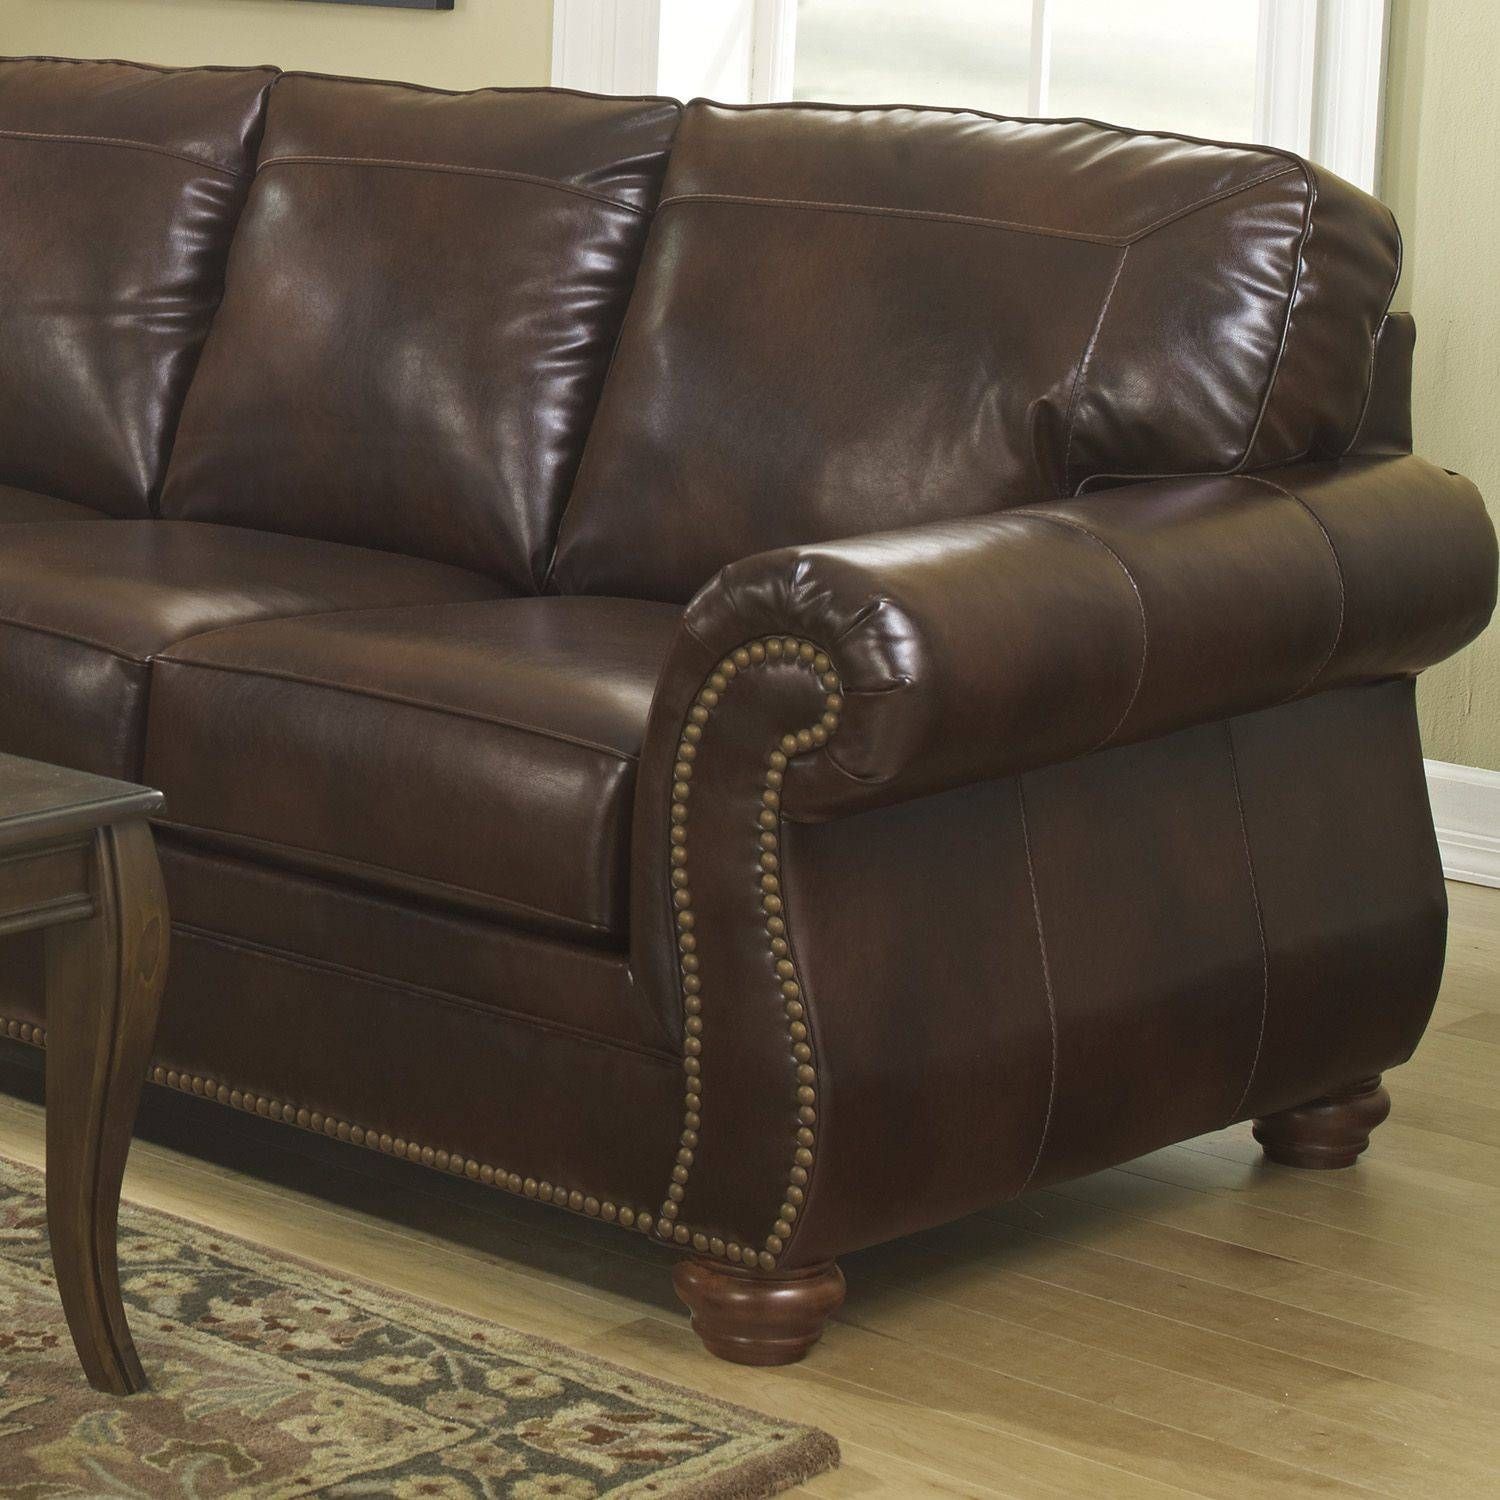 Comfy Berkline Sofa Design At Home — Home Design Stylinghome Intended For Berkline Sofas (View 7 of 15)